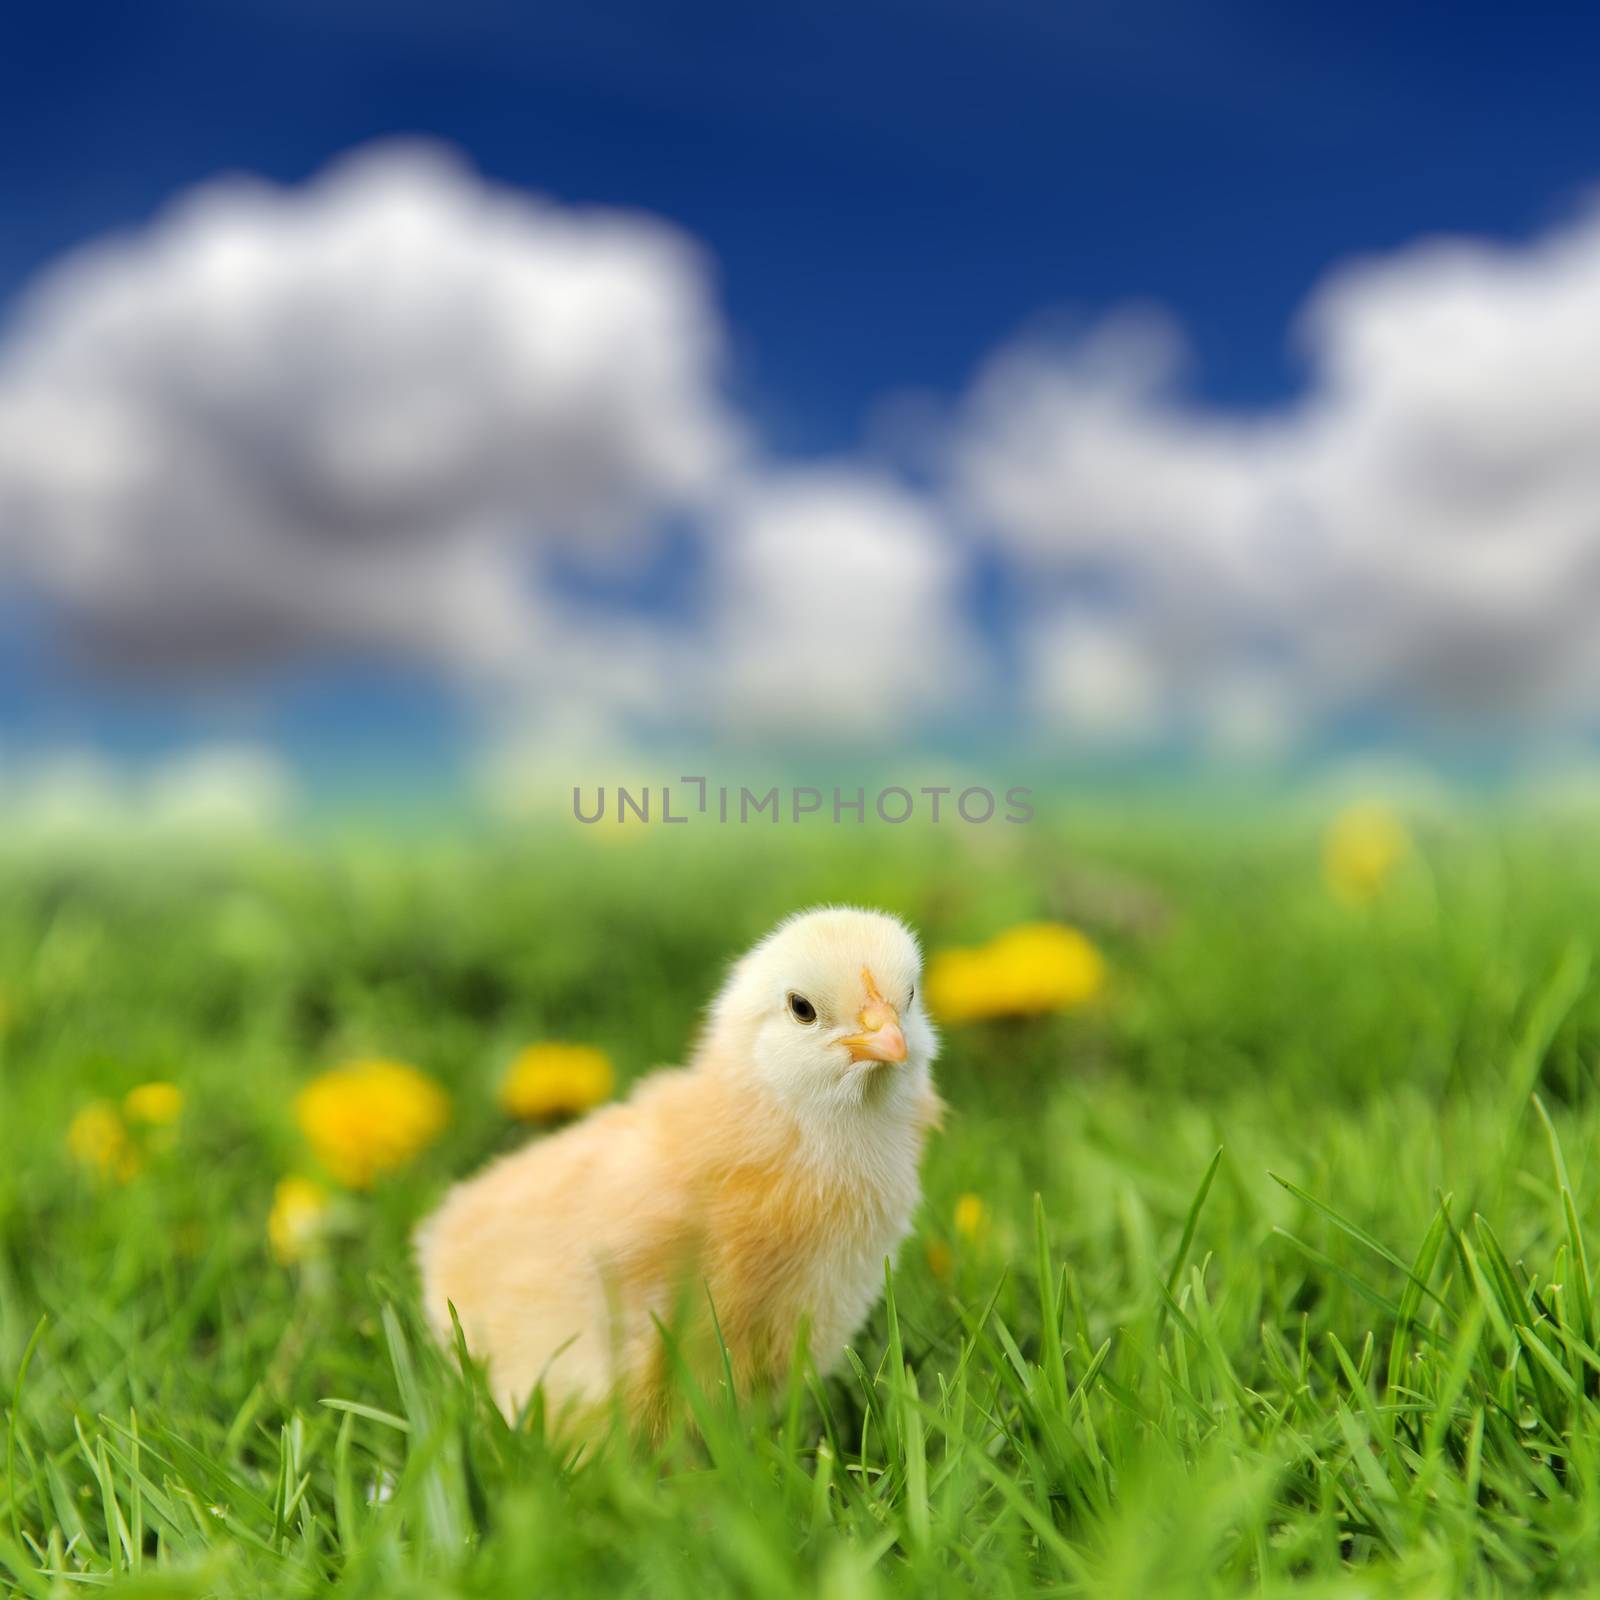 Little chicken on the green grass in summer day